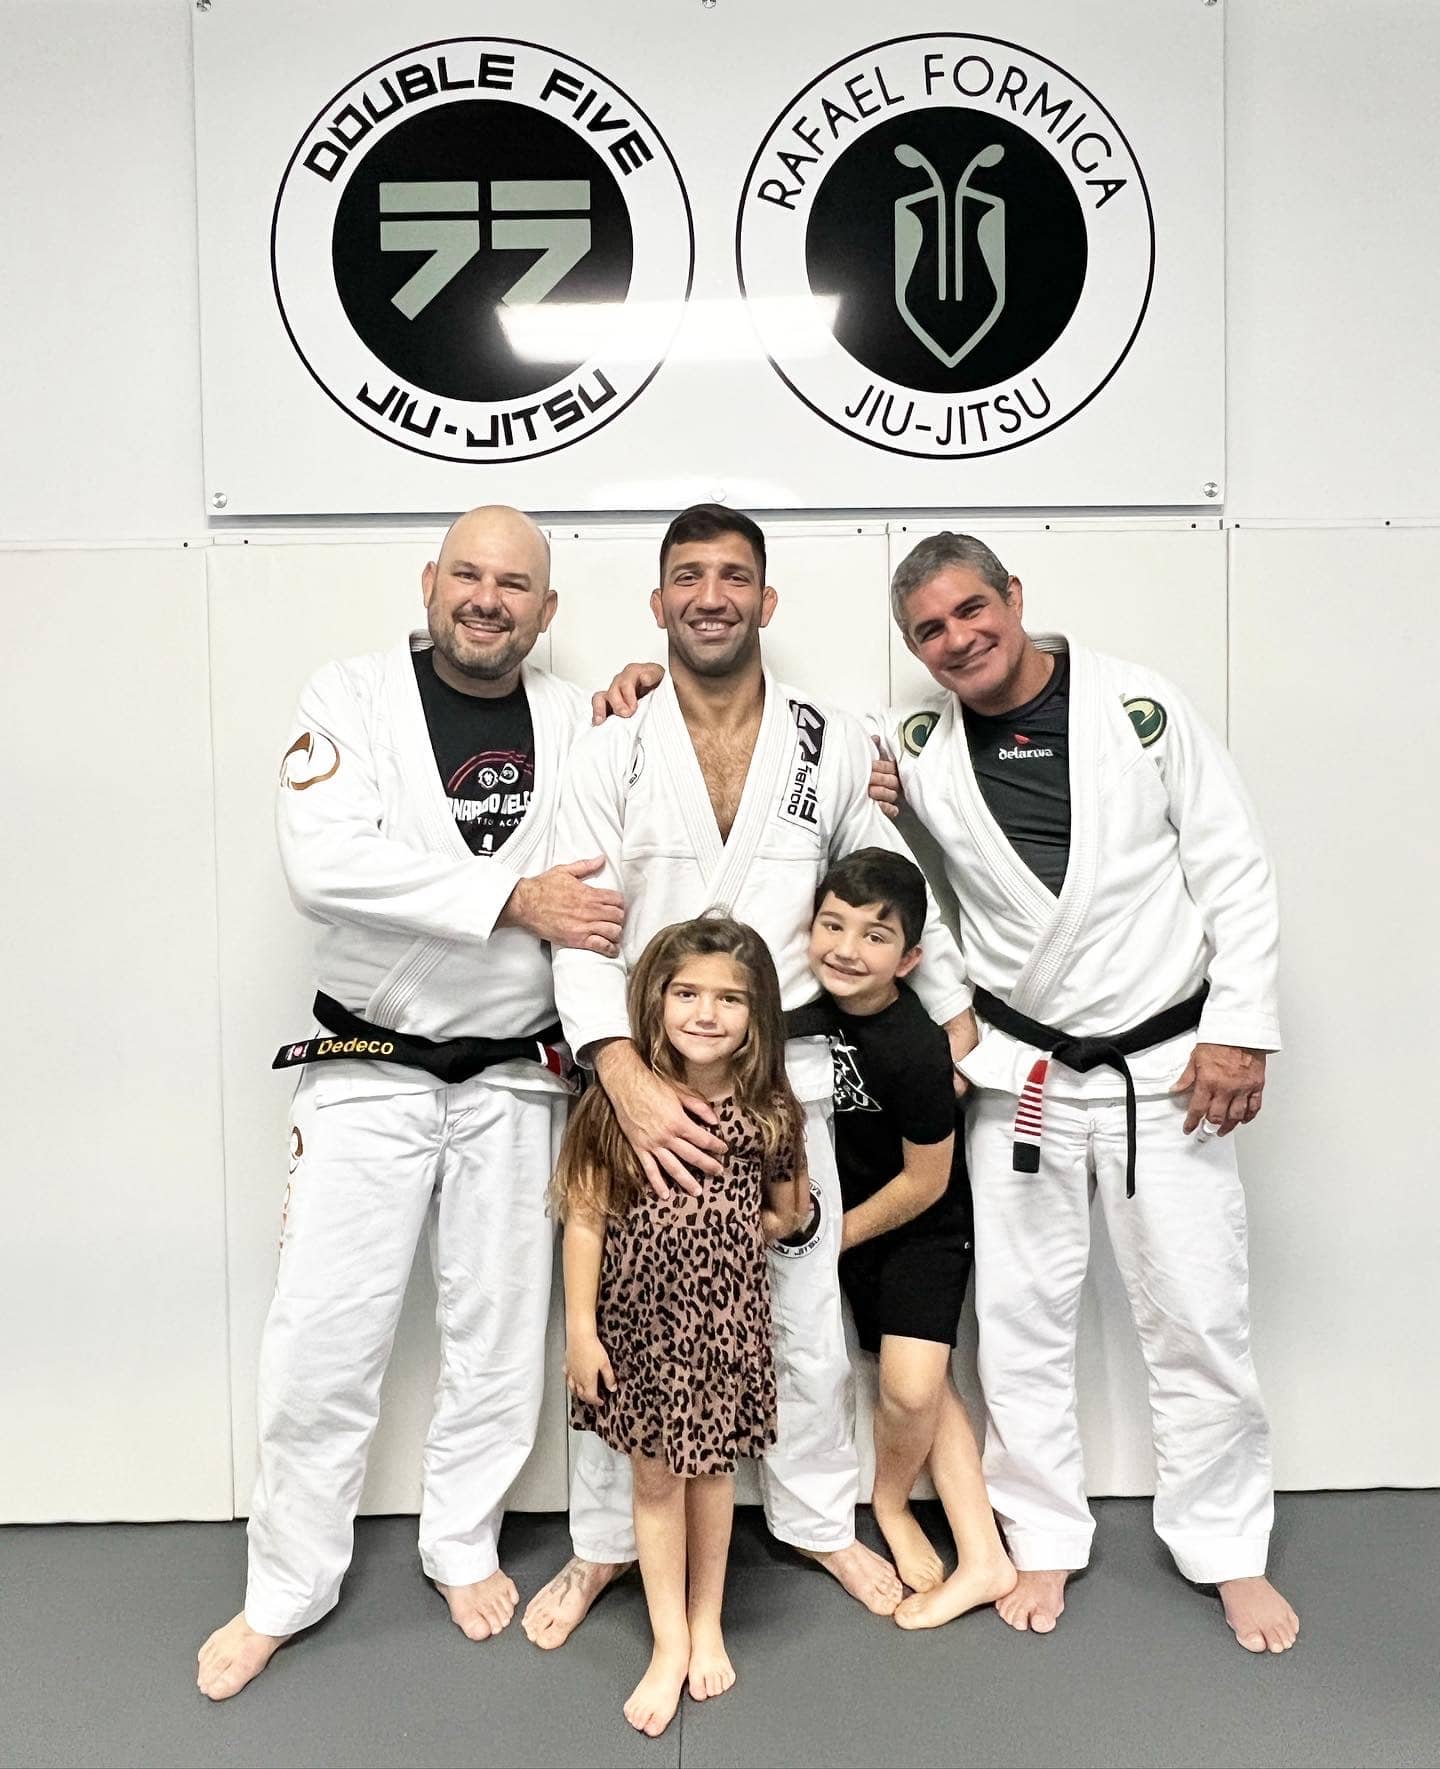 Rafael Formiga Jiu-Jitsu Academy About Us